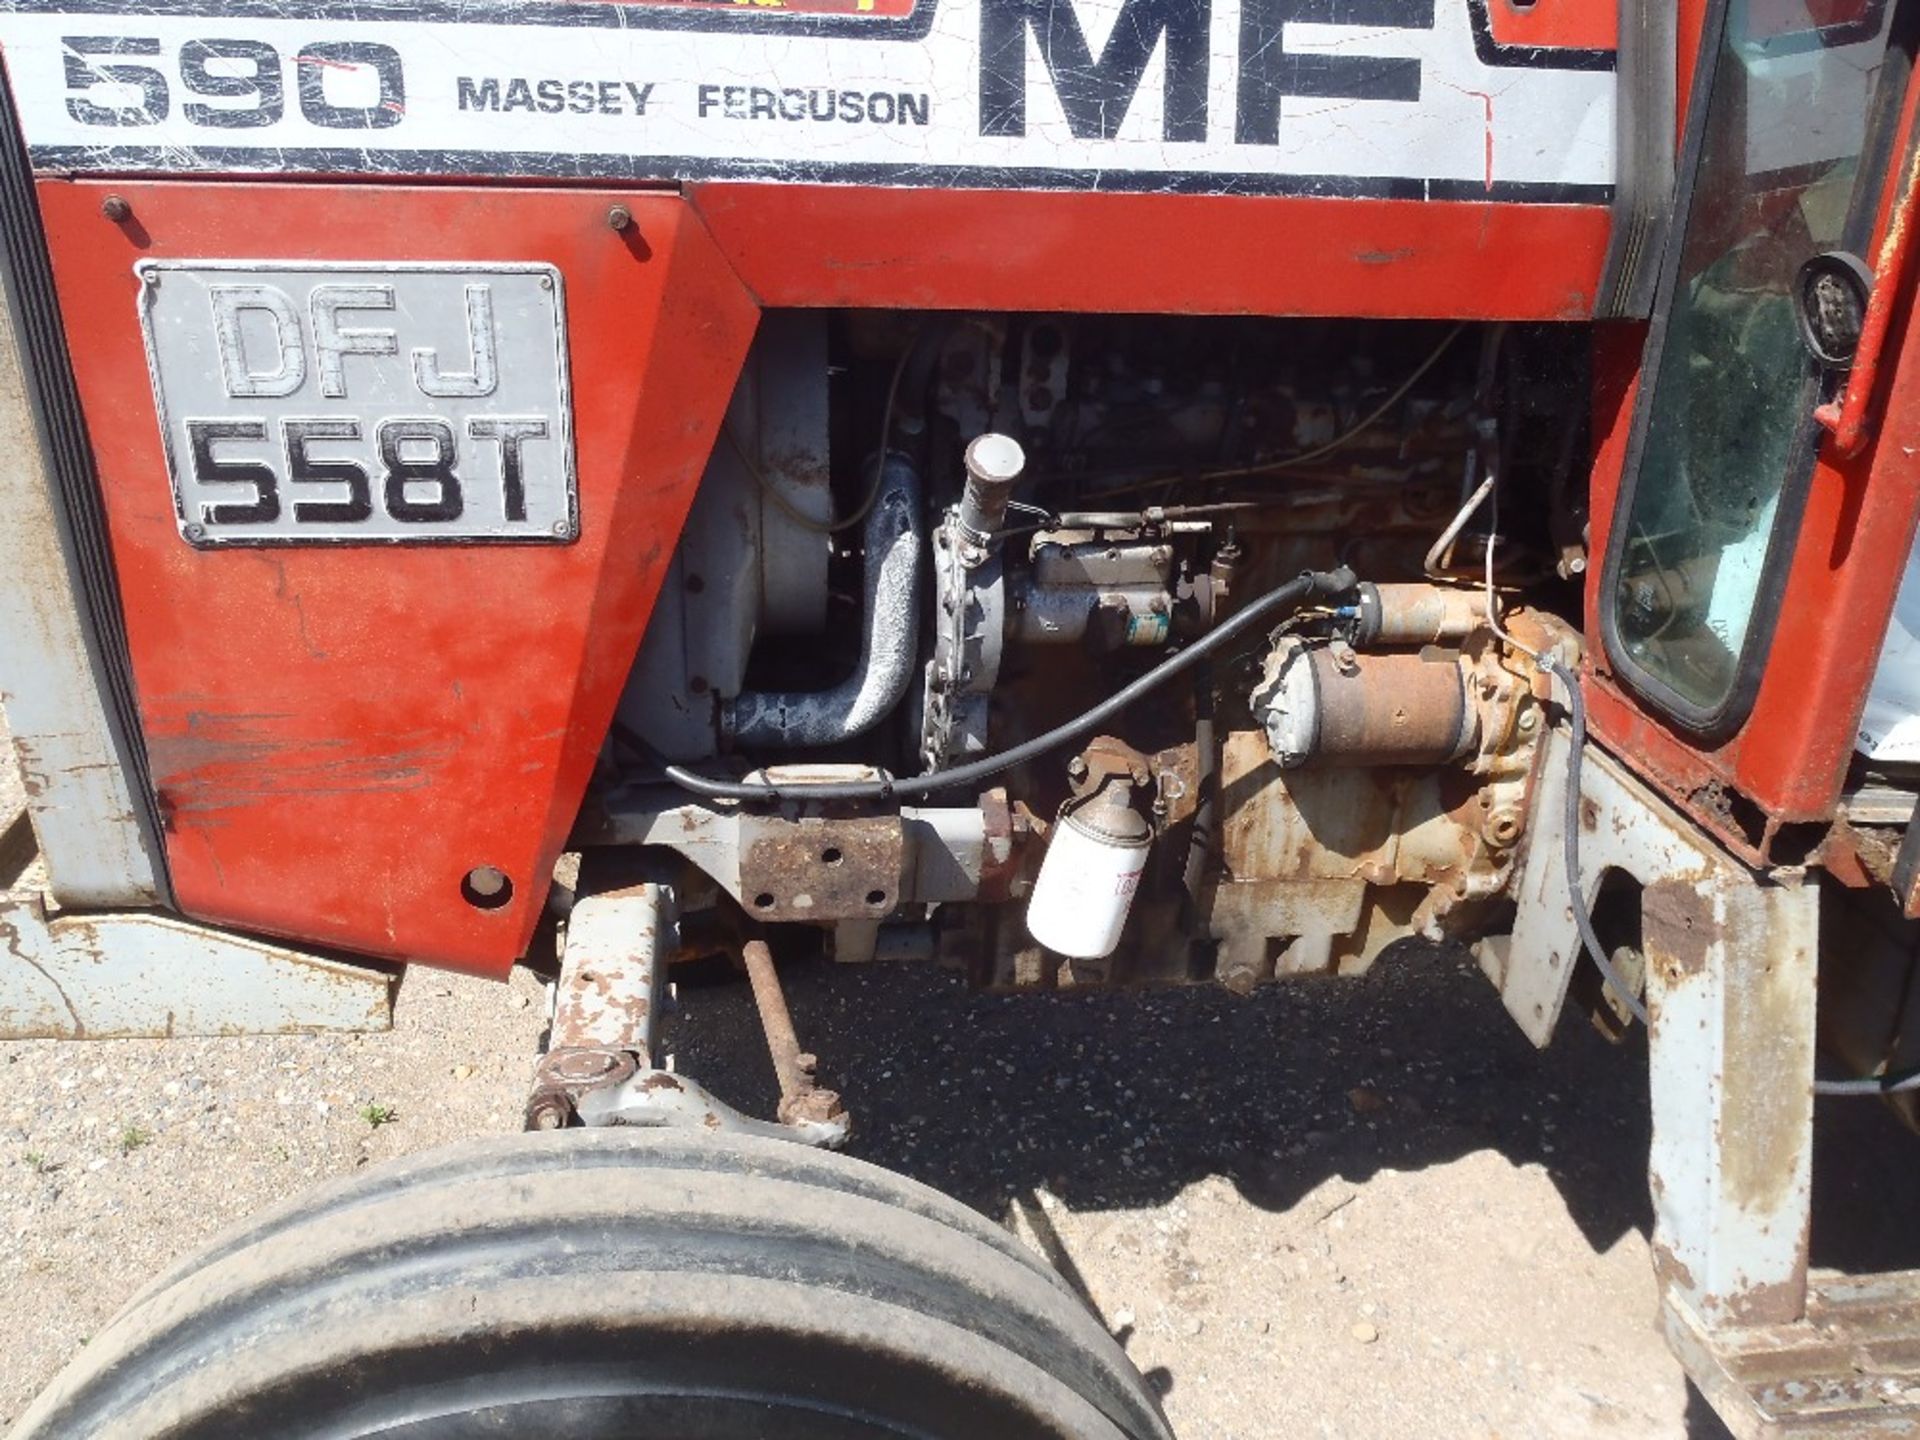 Massey Ferguson 590 Tractor Reg No DFJ 558T Ser No 226028 - Image 8 of 9